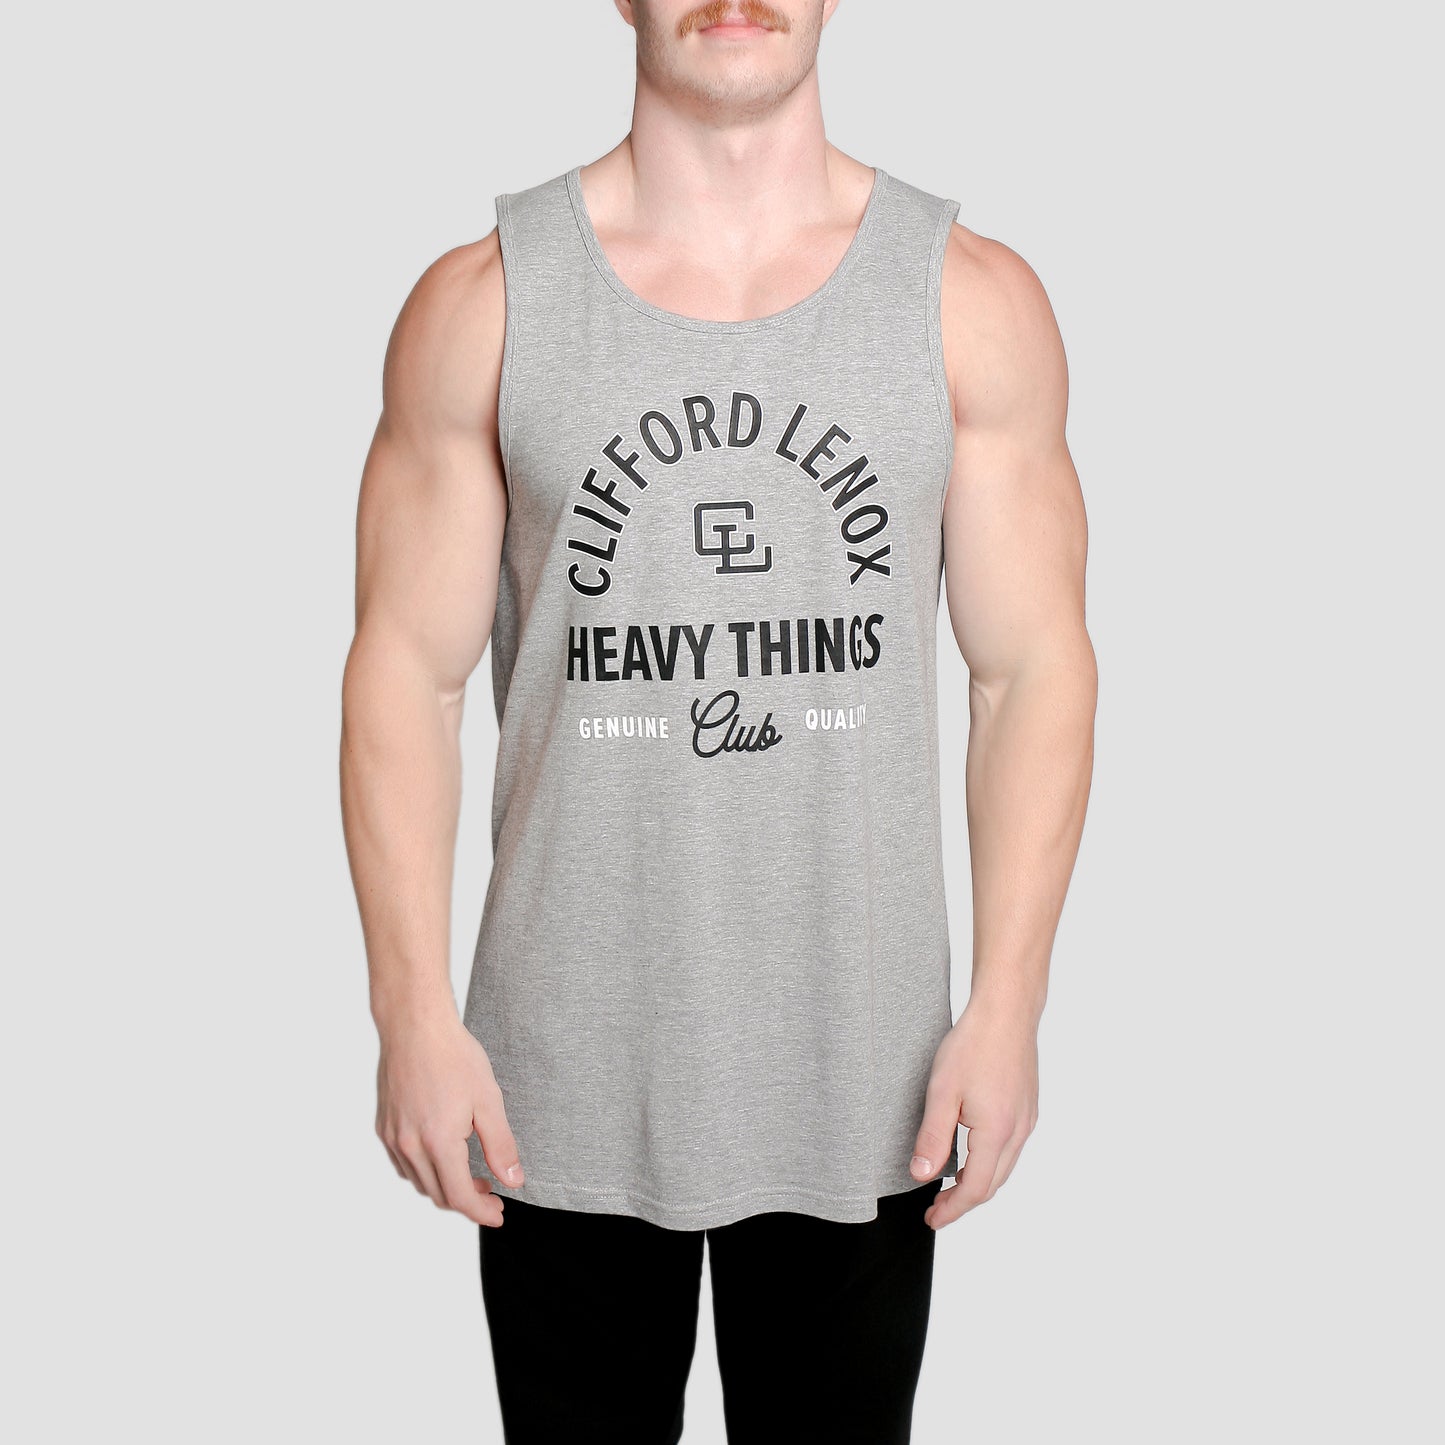 Heavy Things Club Tank Top // Grey Heather